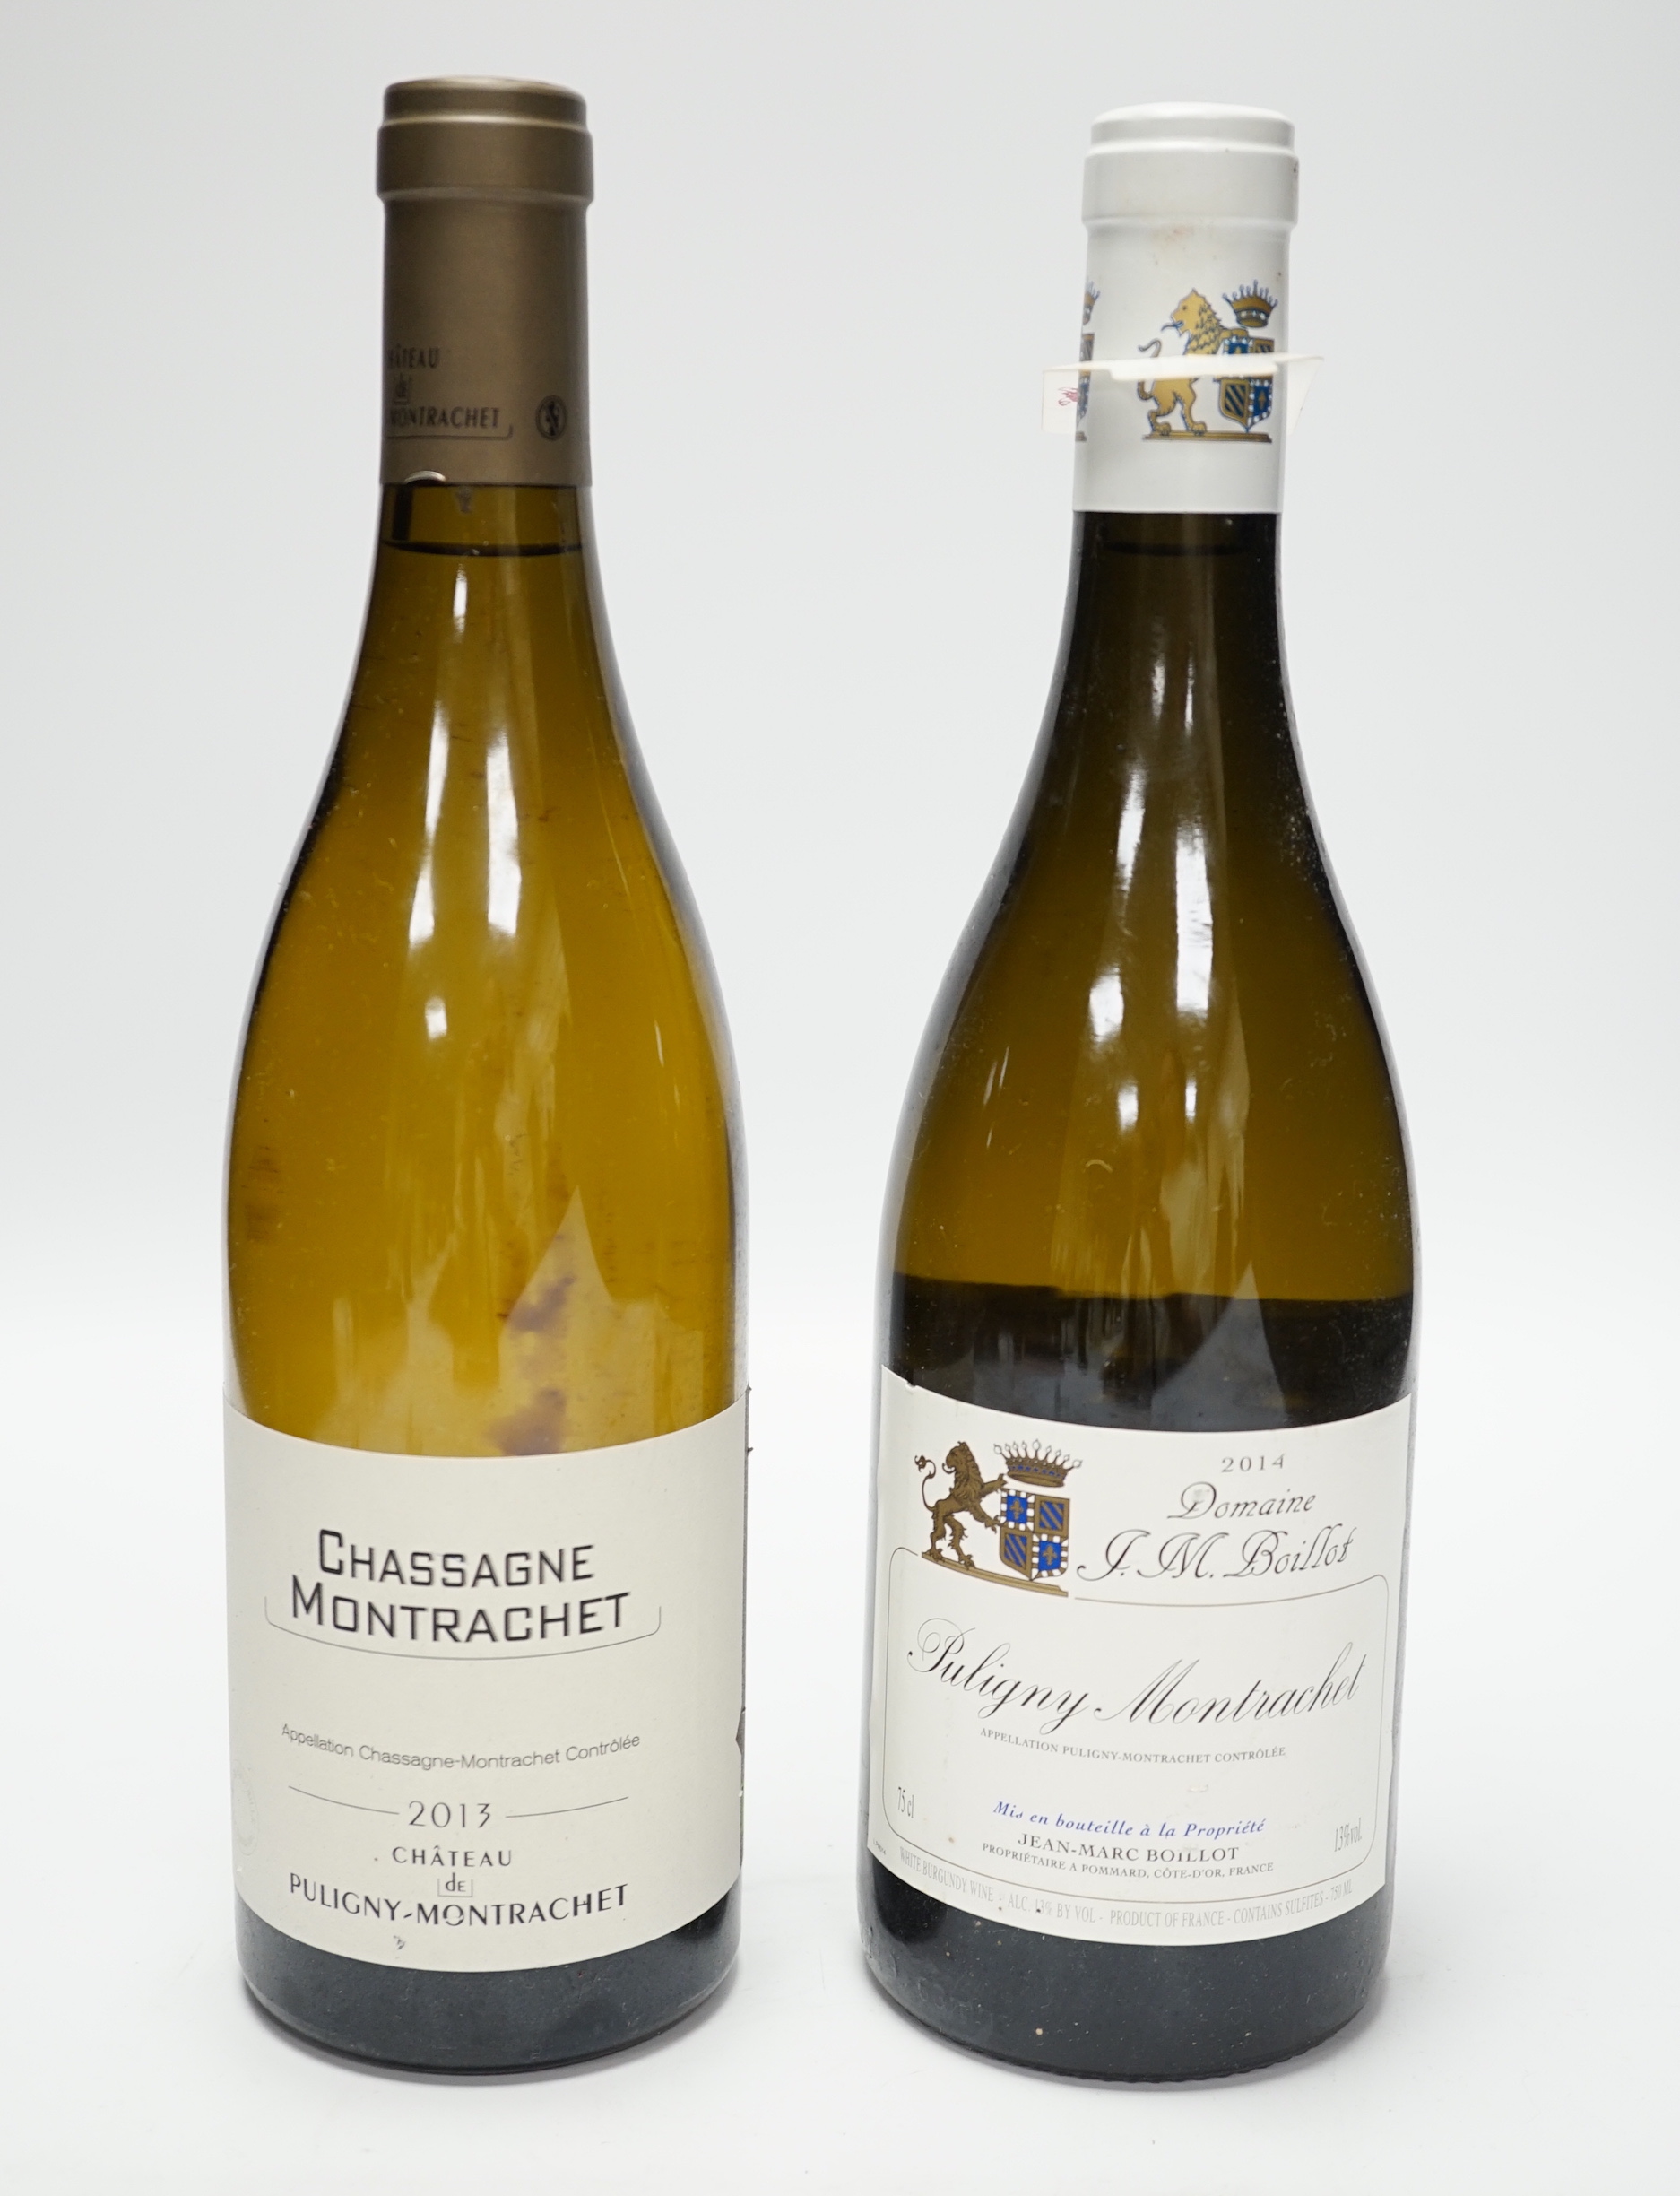 One bottle of Meursault-Charmes premier cru, les Charmes dessus 2014, two bottles of Chassagne Montrachet, Chateau de Puligny-Montrachet 2013, two bottles of Couton-Charlemagne grande cru 2011 and four bottles of Puligny